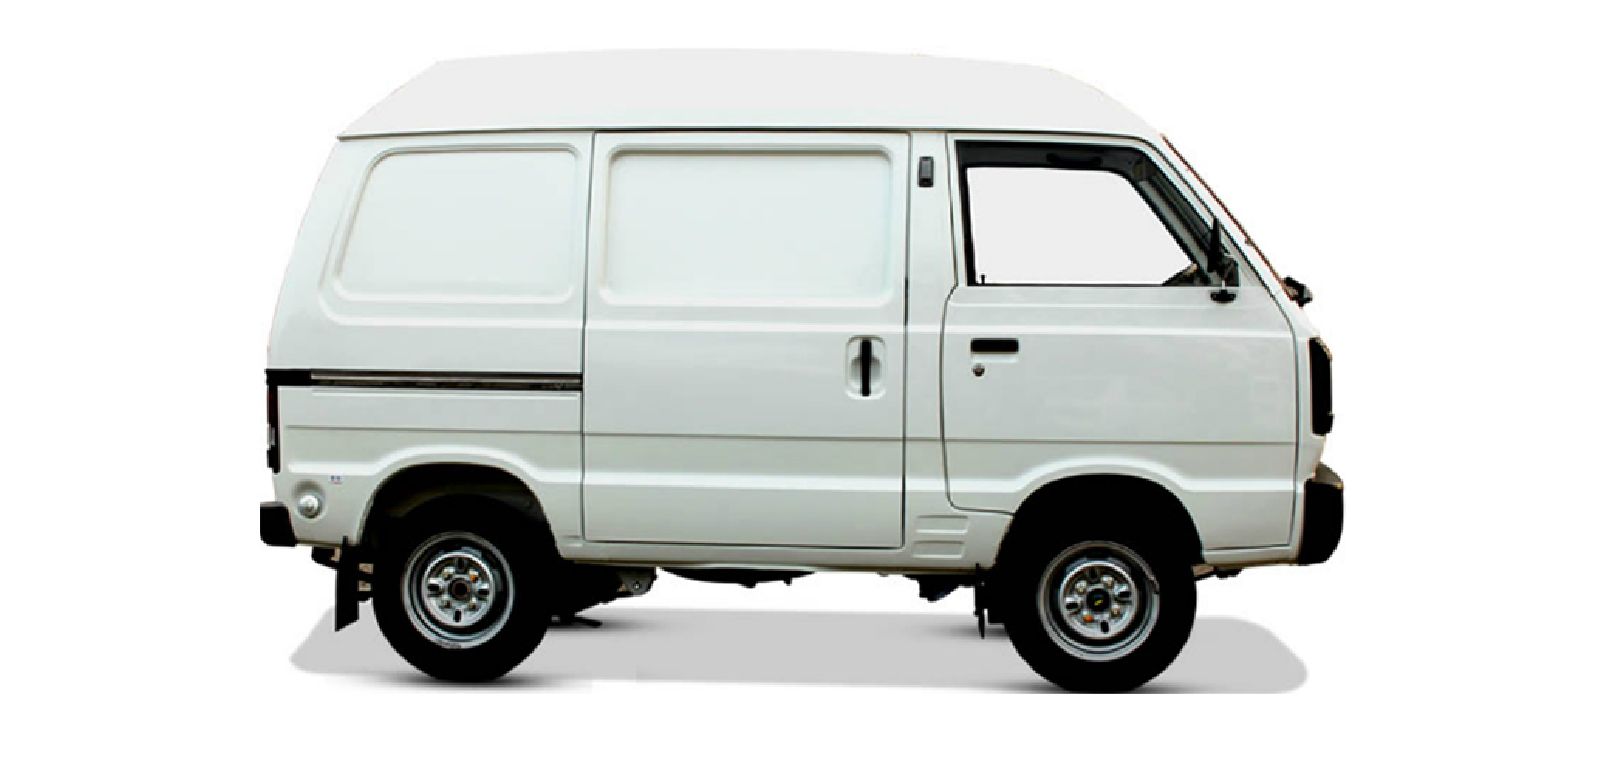 Suzuki Bolan new model price in Pakistan